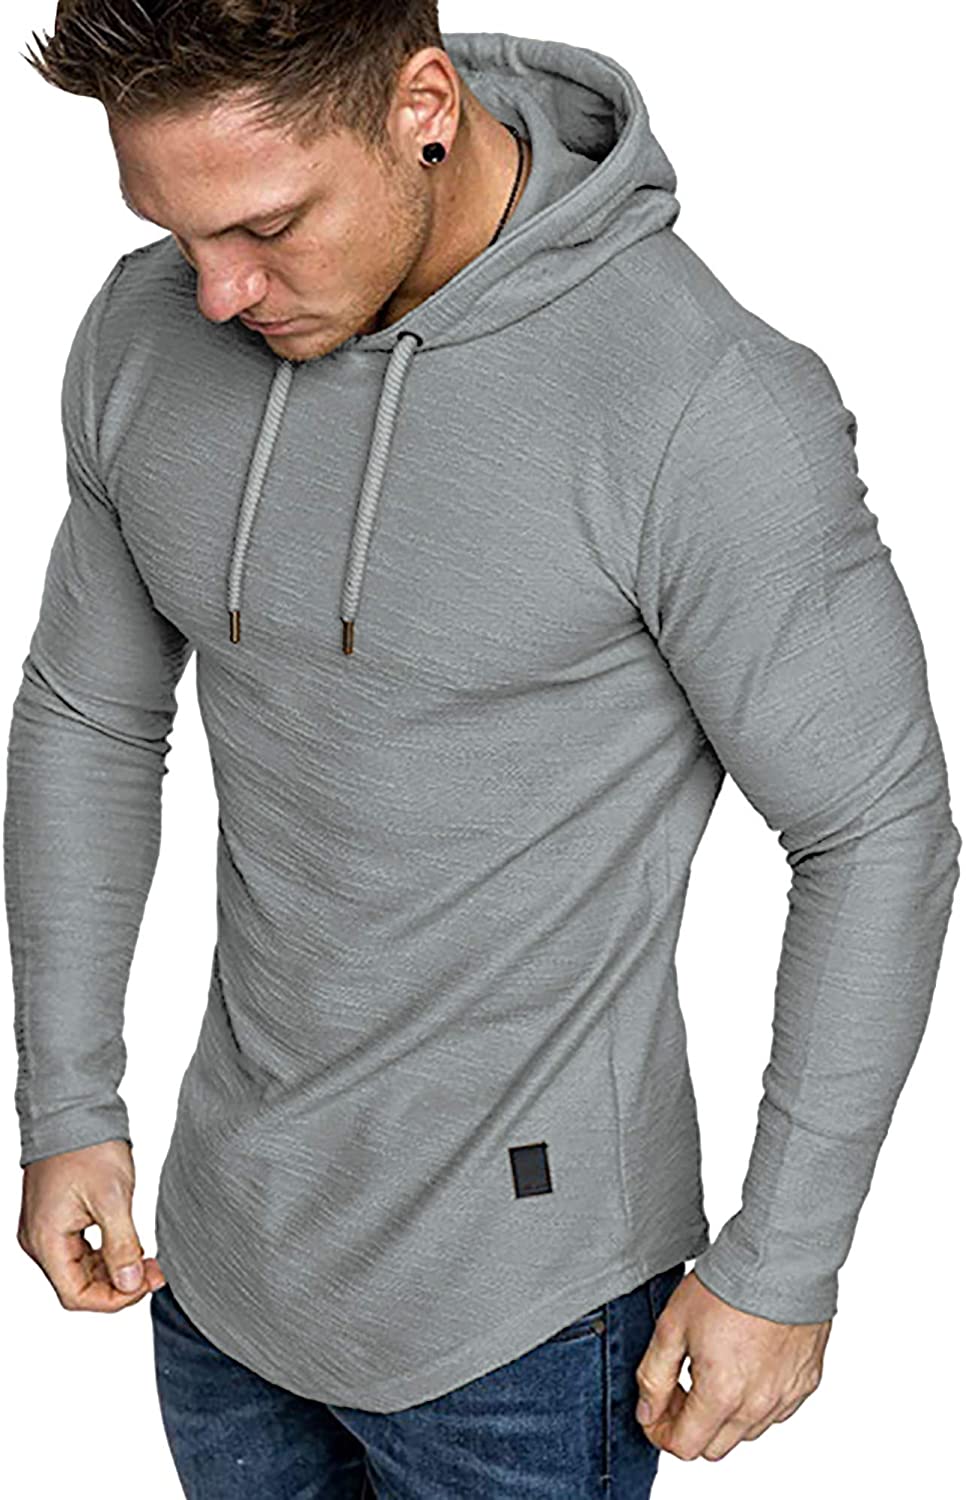 lexiart Mens Fashion Athletic Hoodies Sport Sweatshirt Solid Color ...